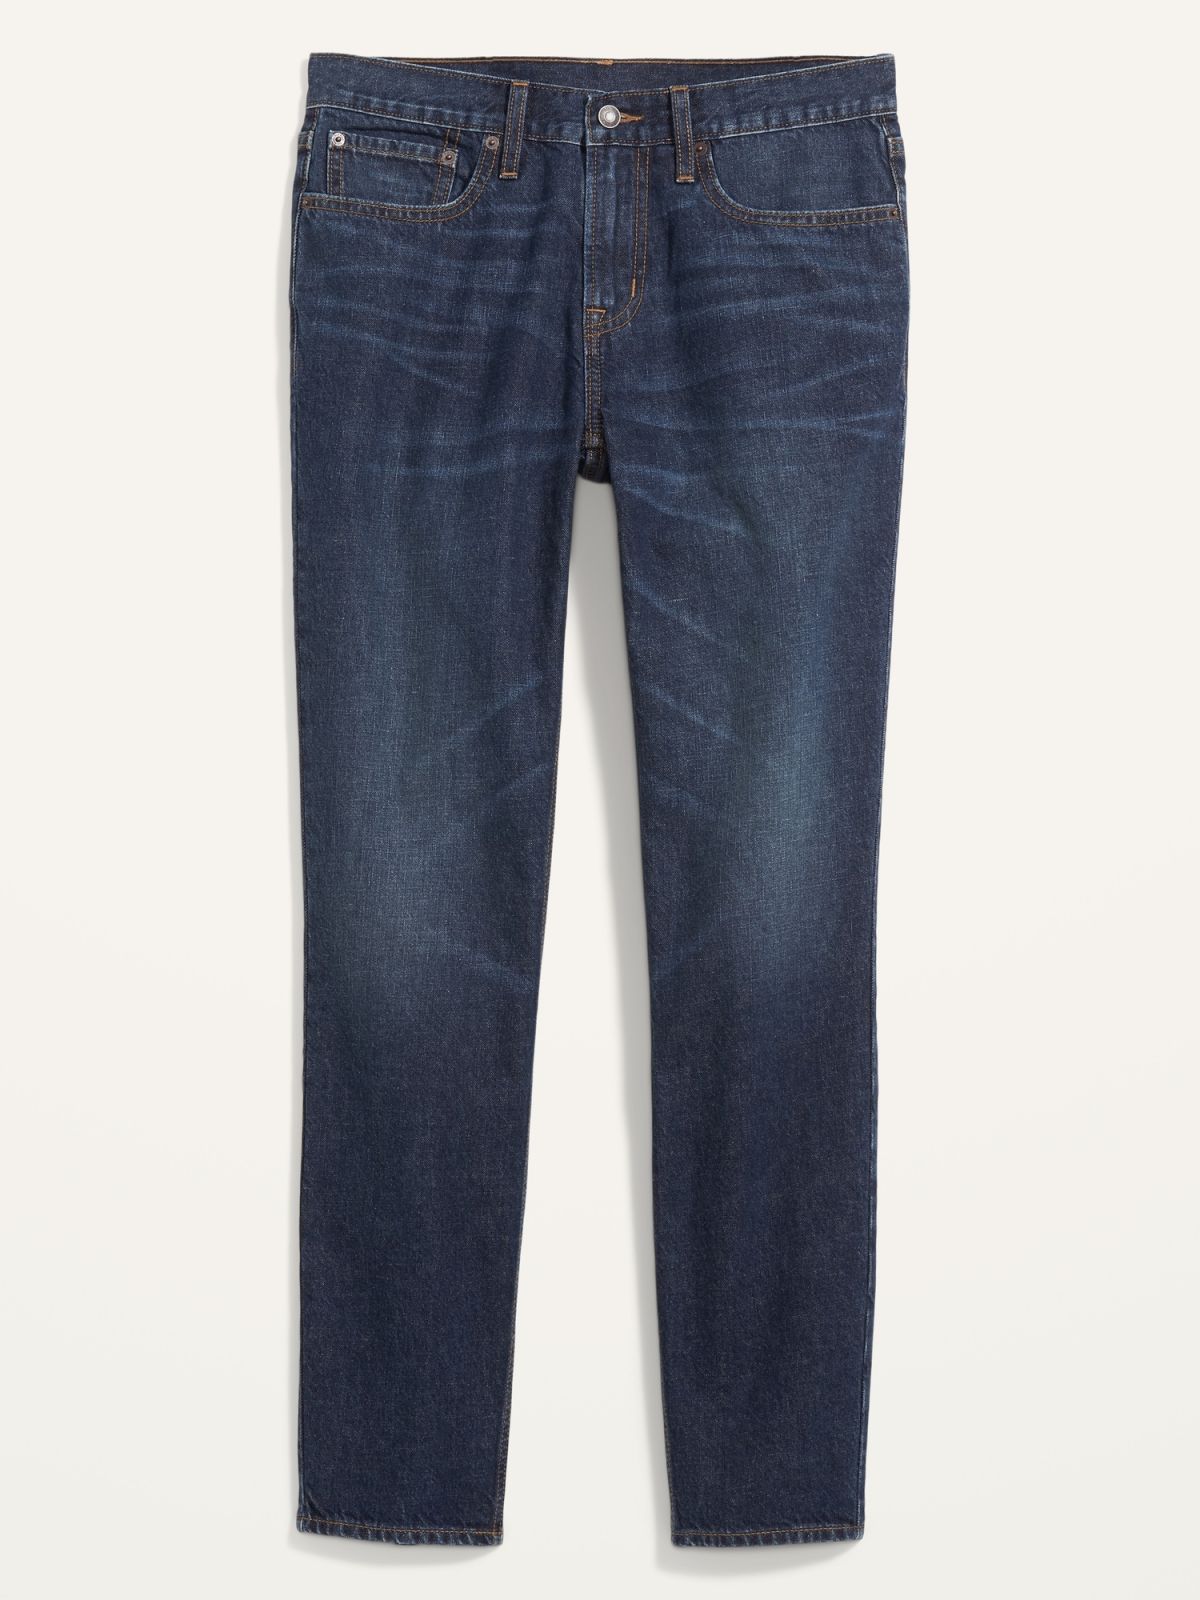  ג'ינס ווש בגזרה ישרה של OLD NAVY